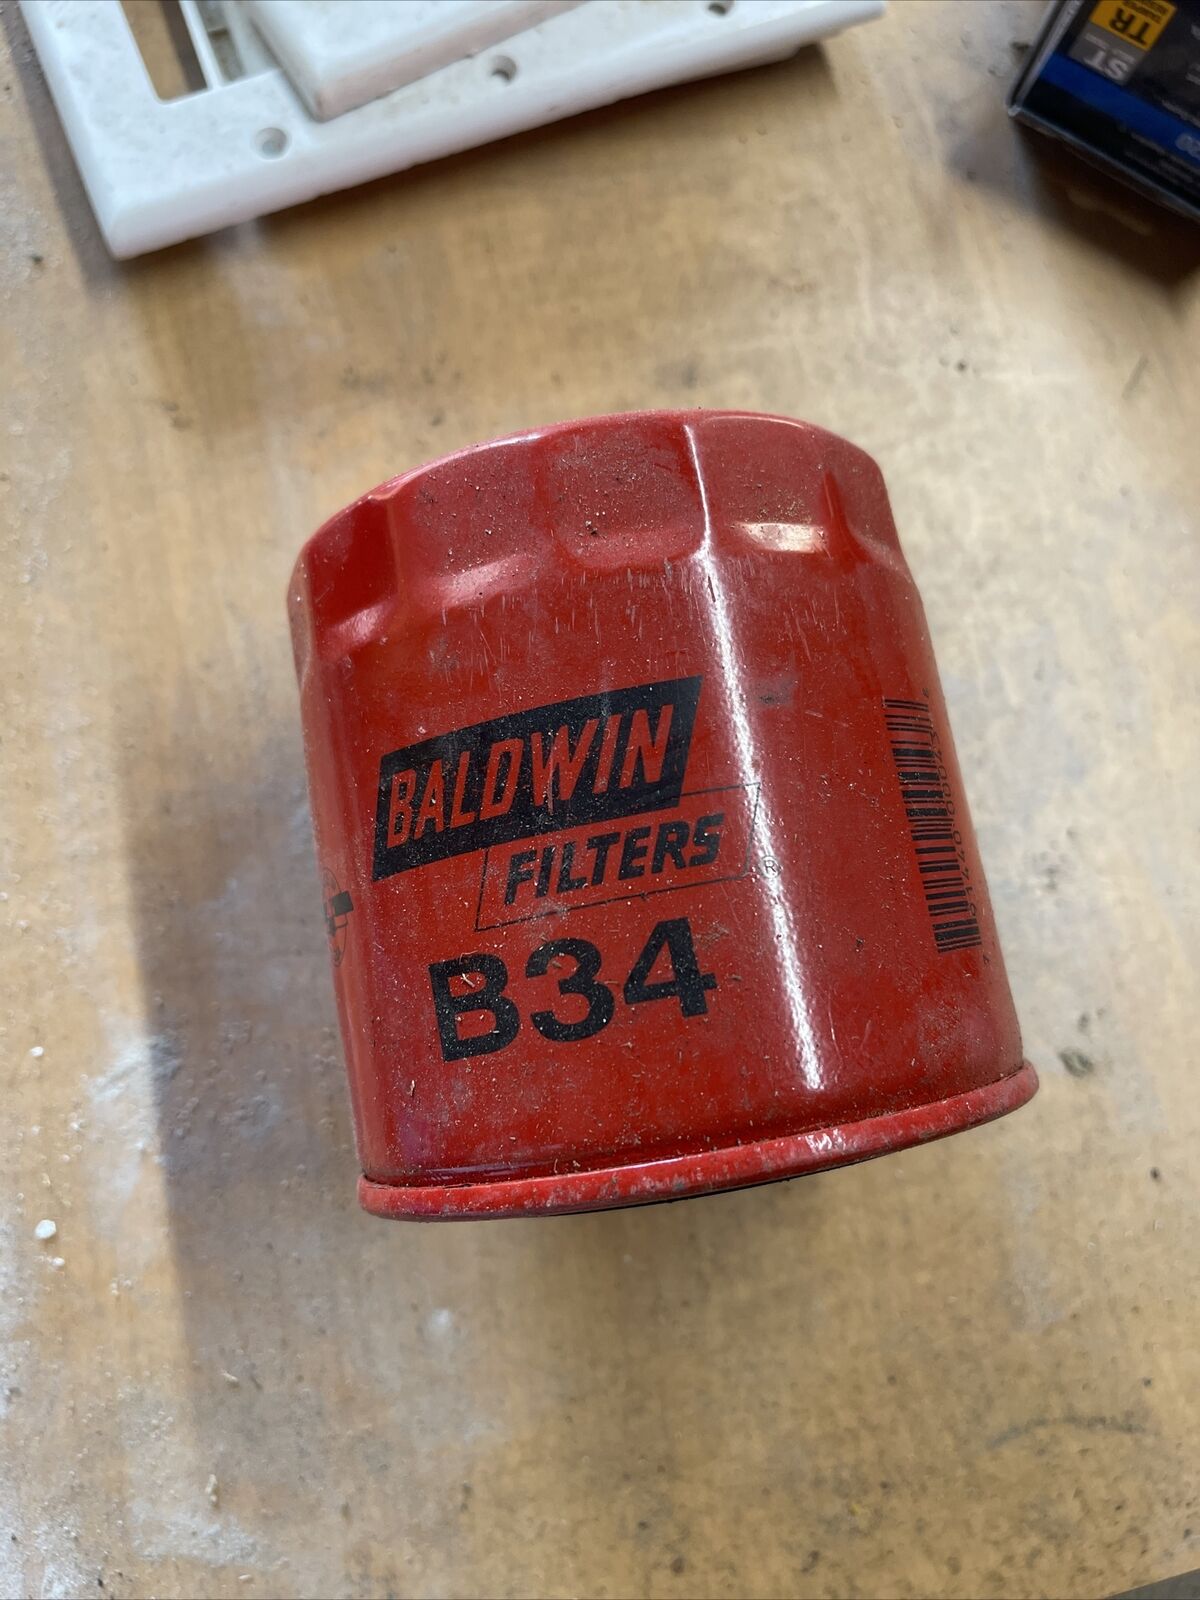 Baldwin filter b34